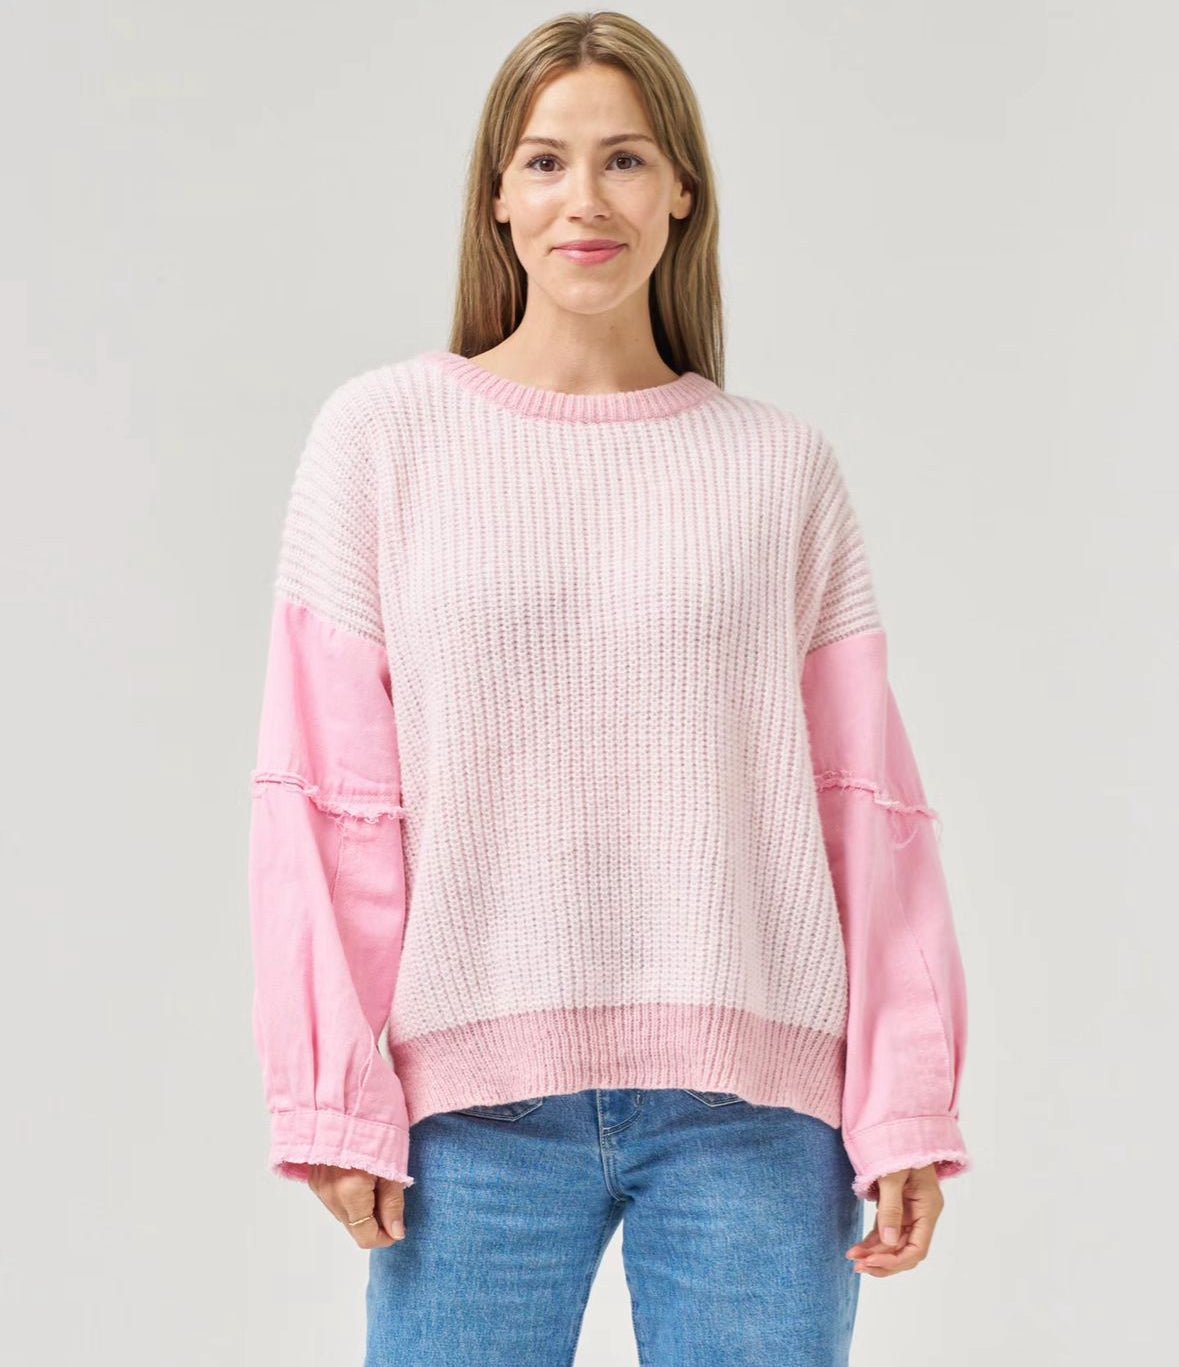 Denim Sleeved Knit (Pink) - Something For Me​​